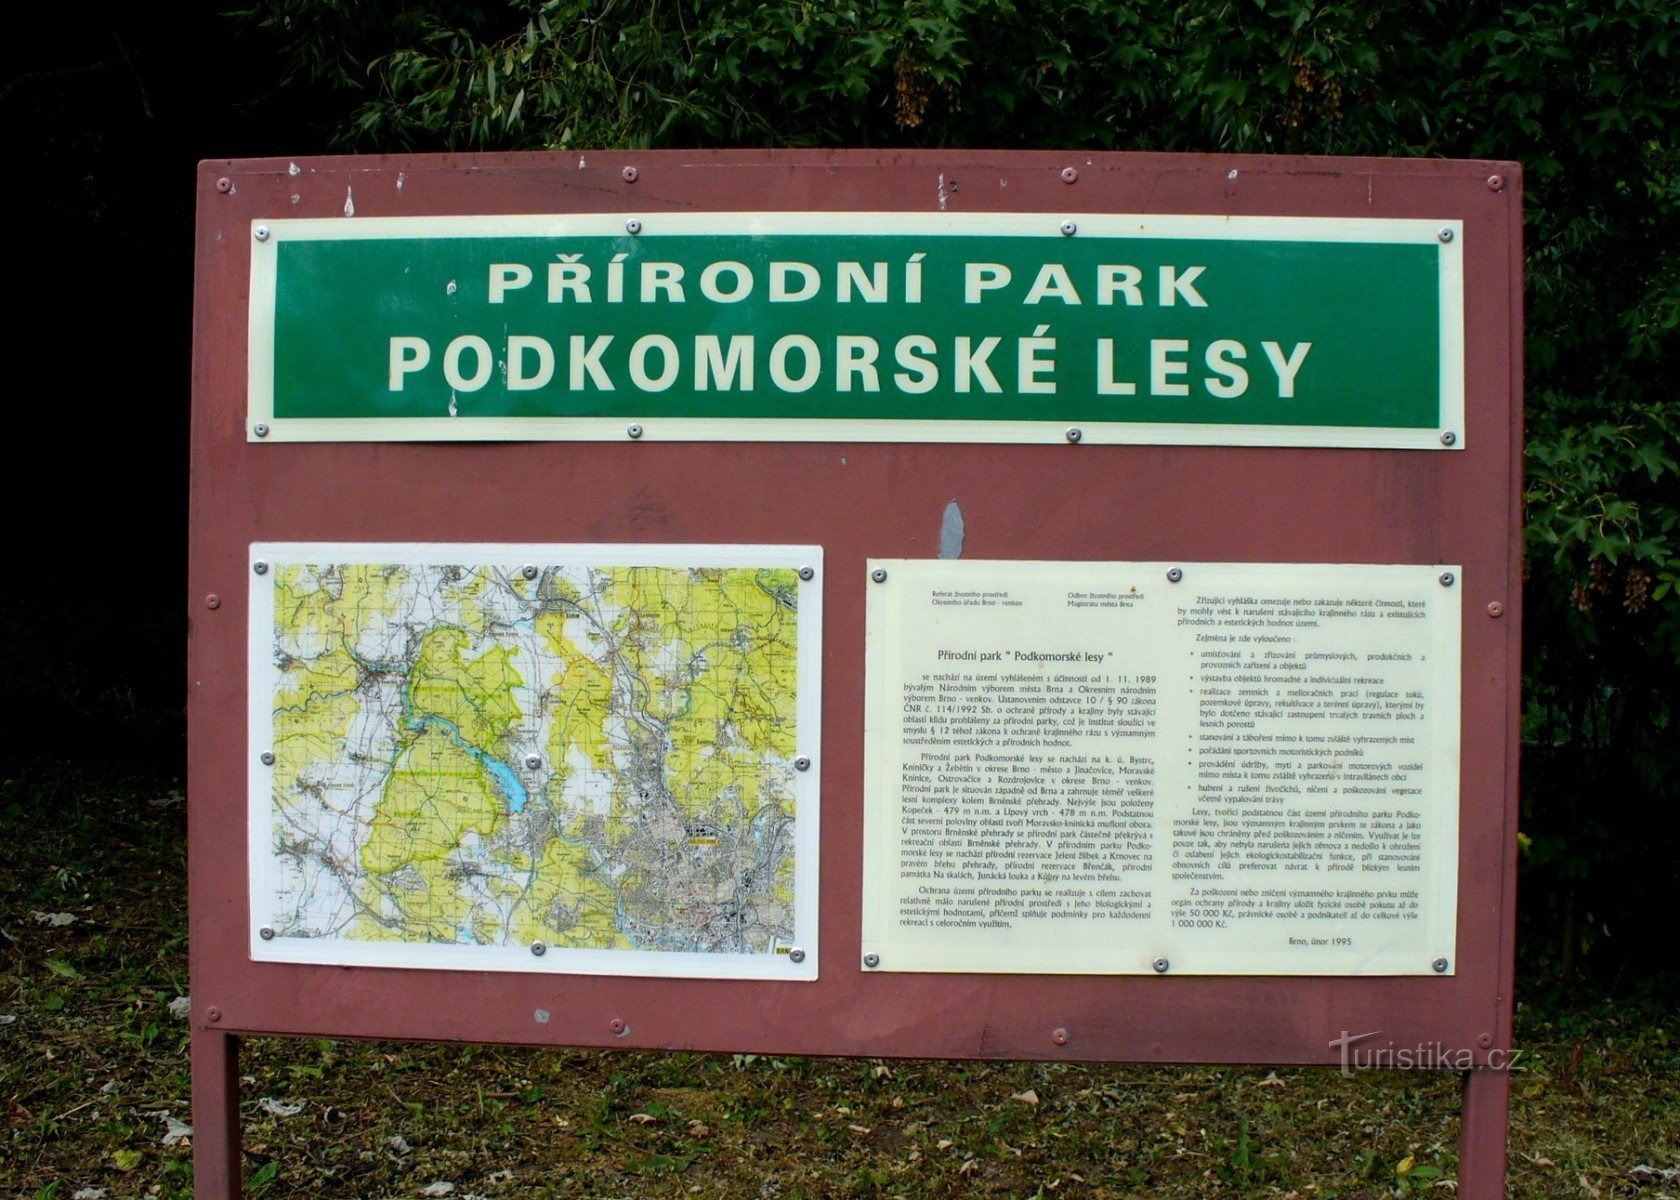 Parcul natural Podkomorské lesy